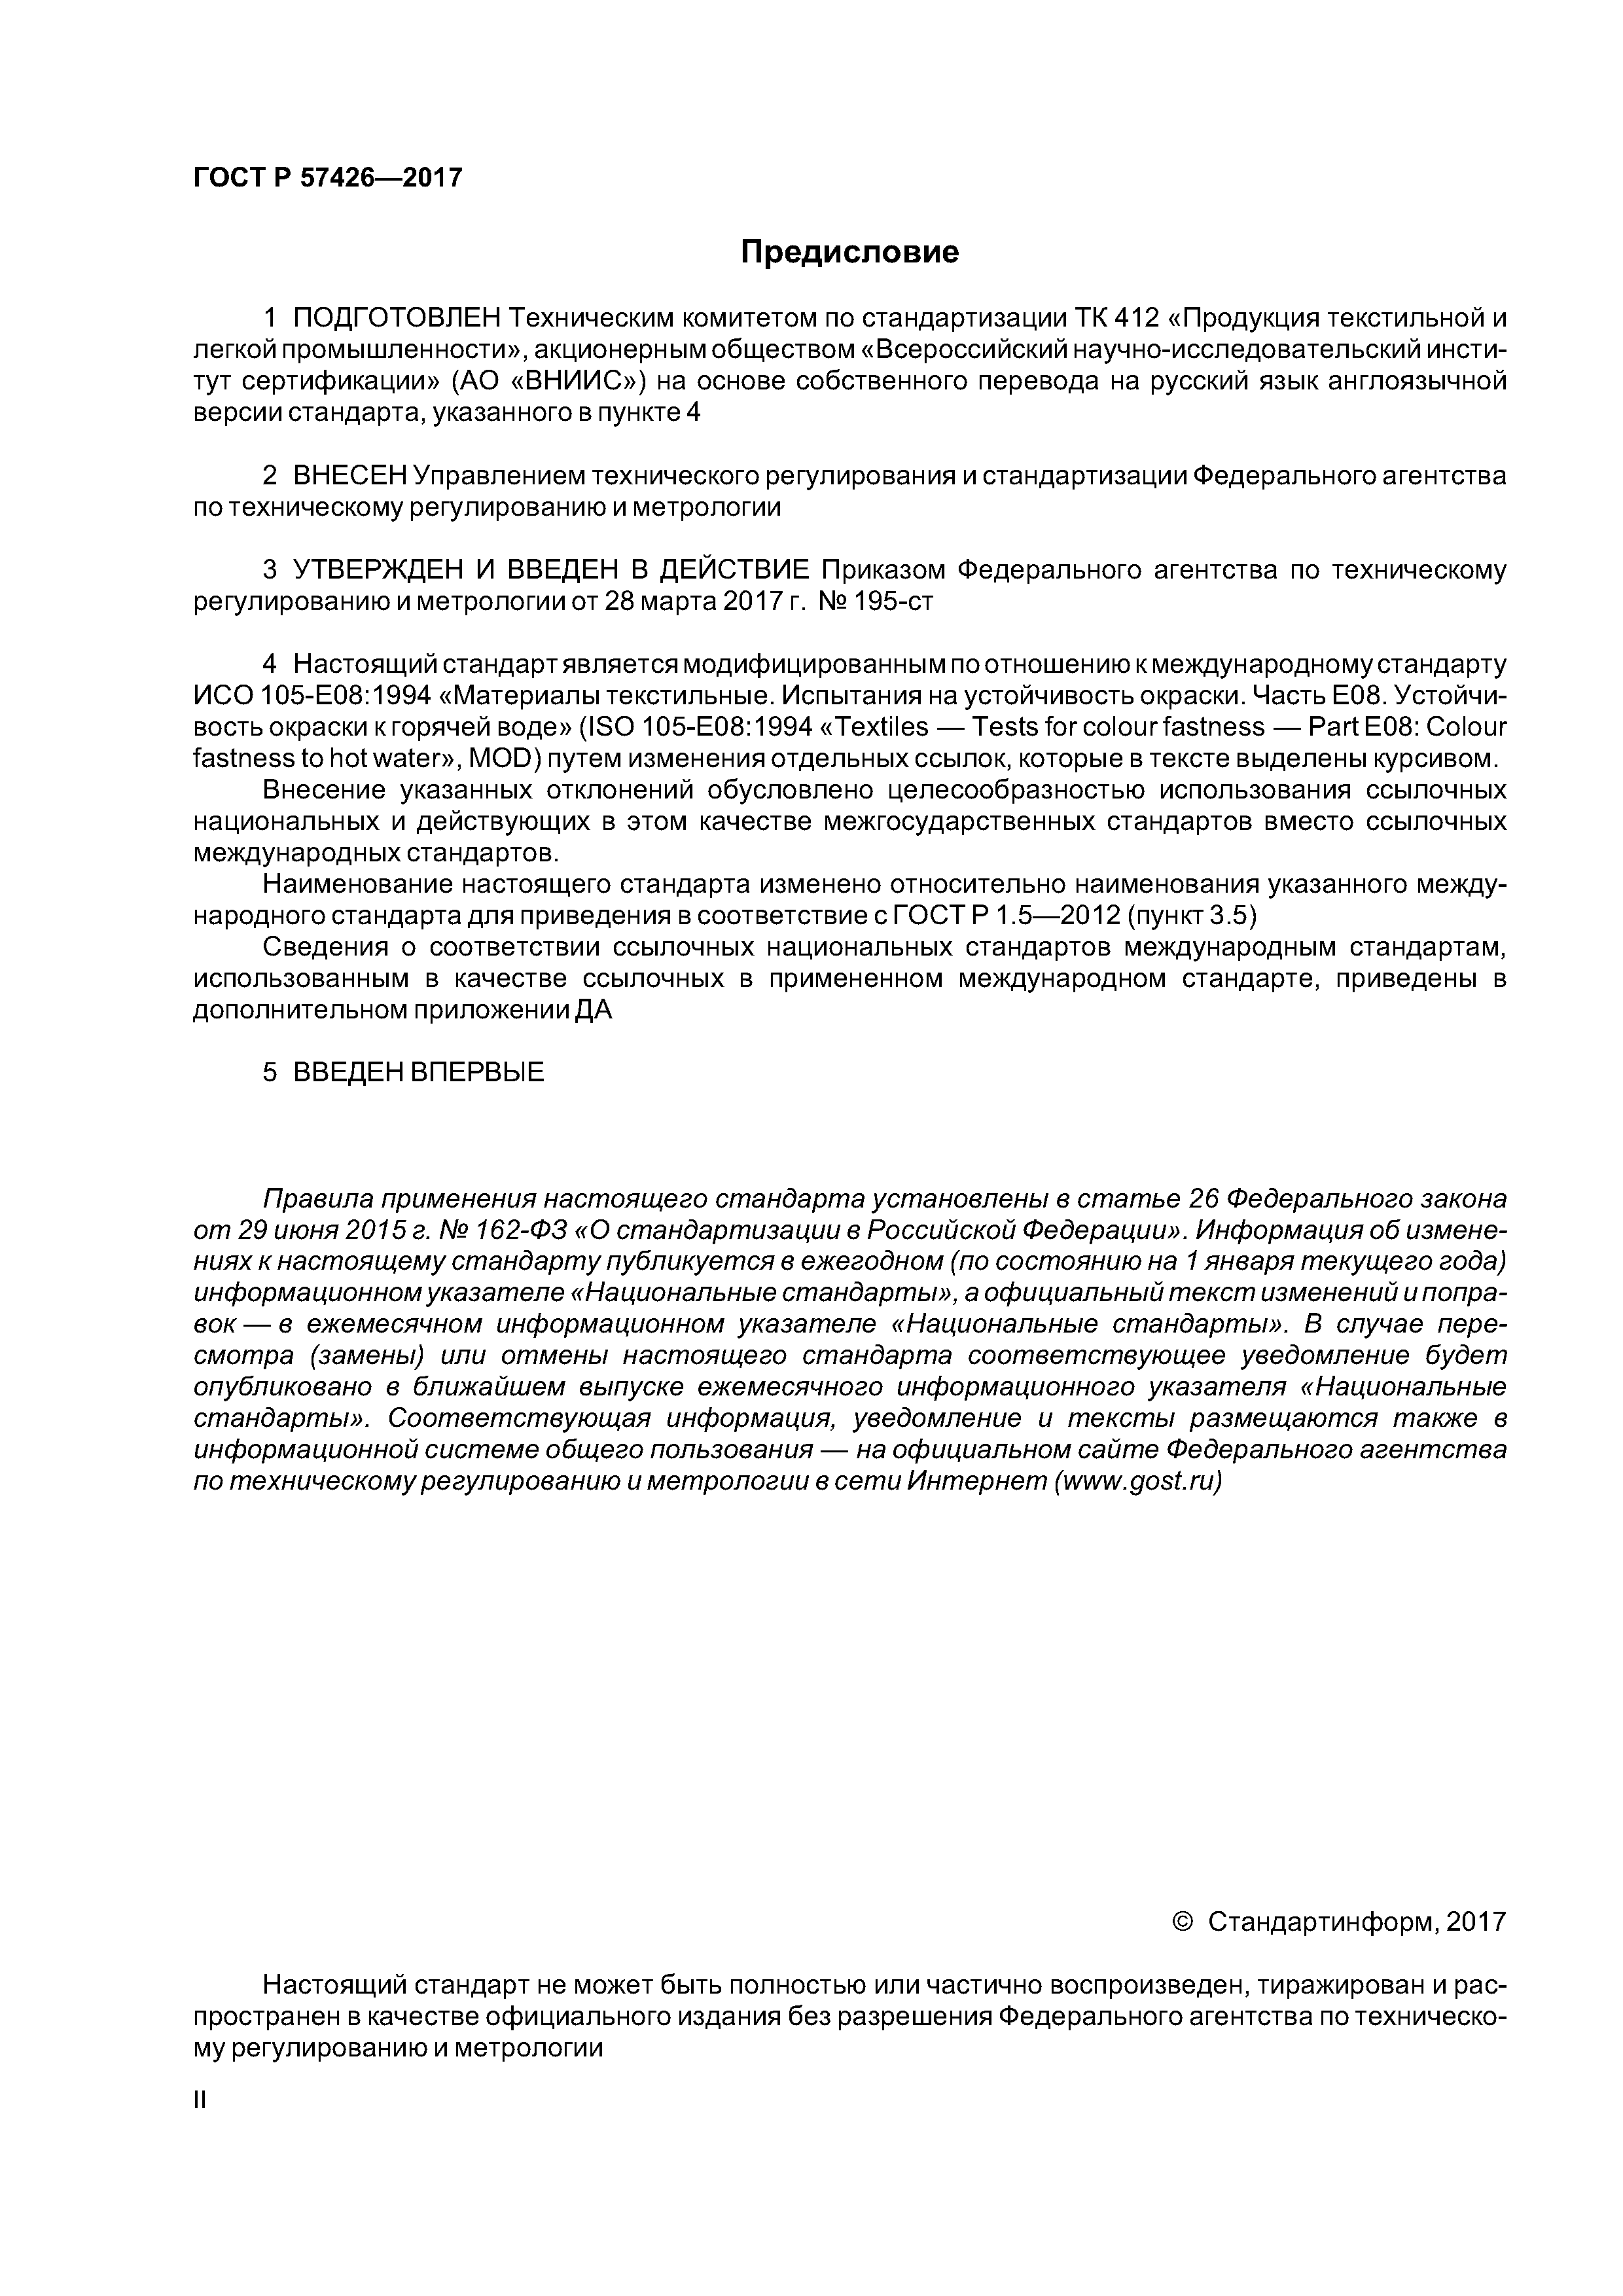 ГОСТ Р 57426-2017